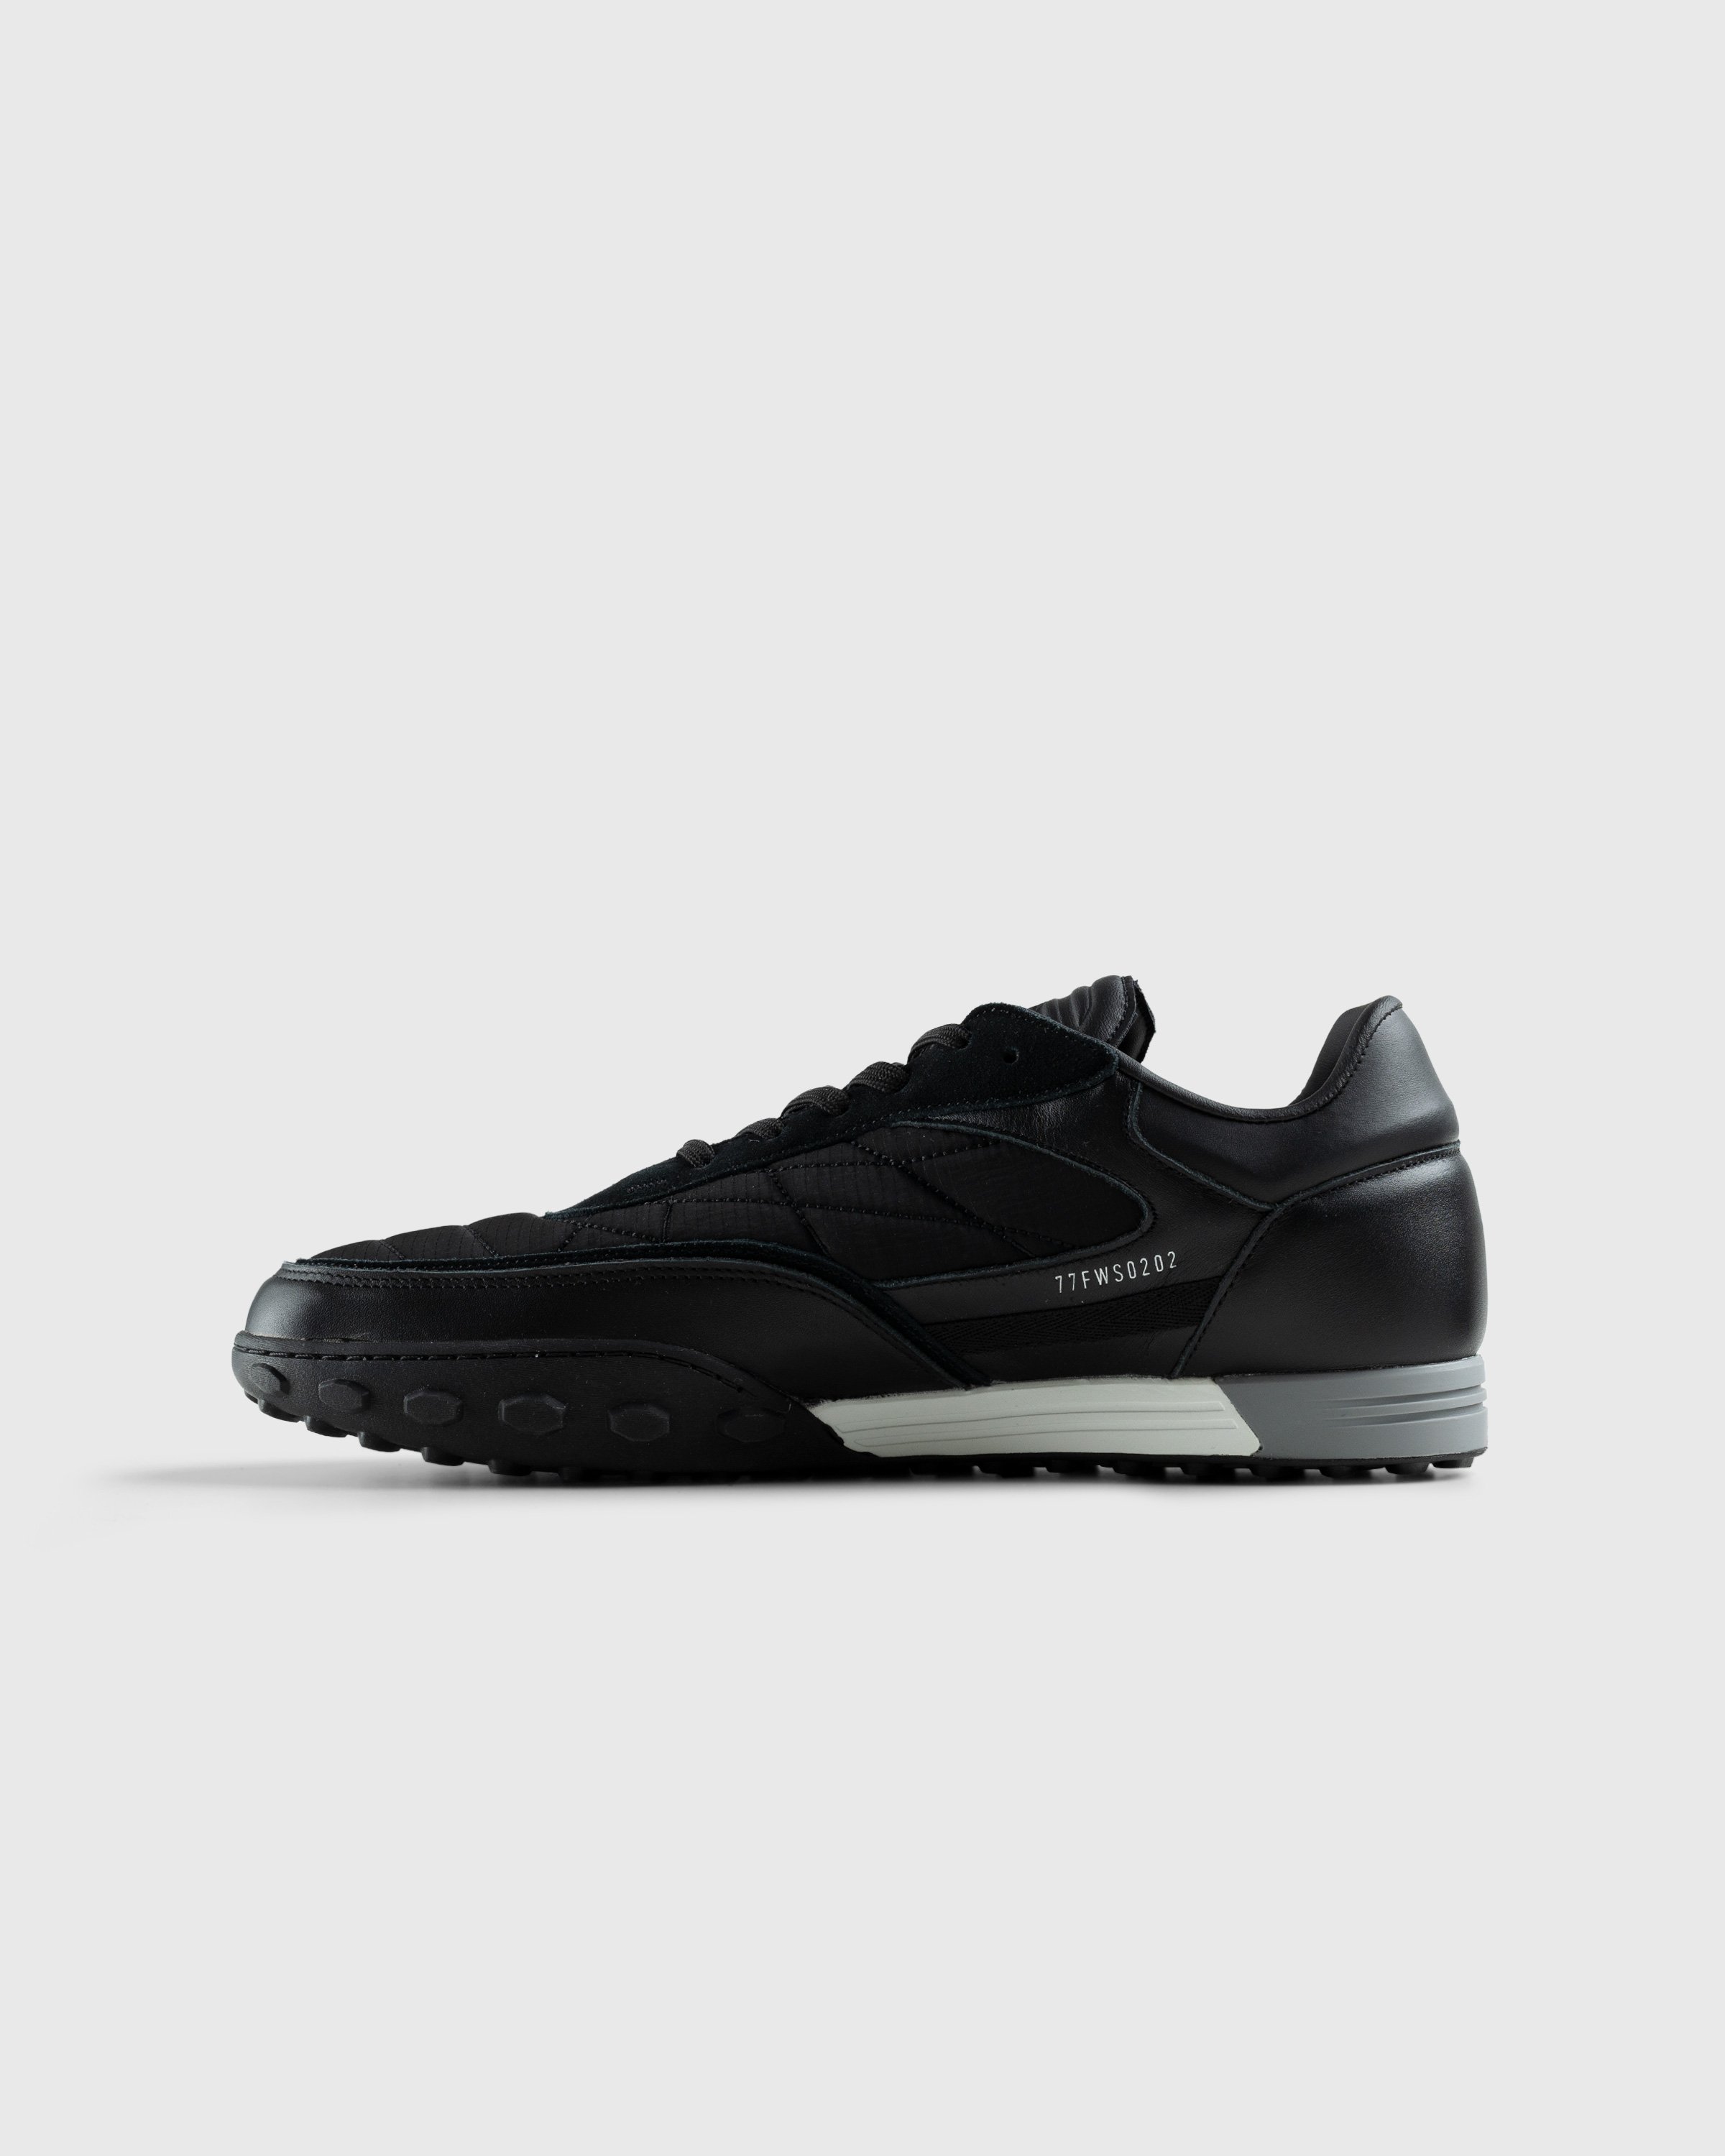 Stone Island - Football Sneaker Black - Footwear - Black - Image 2